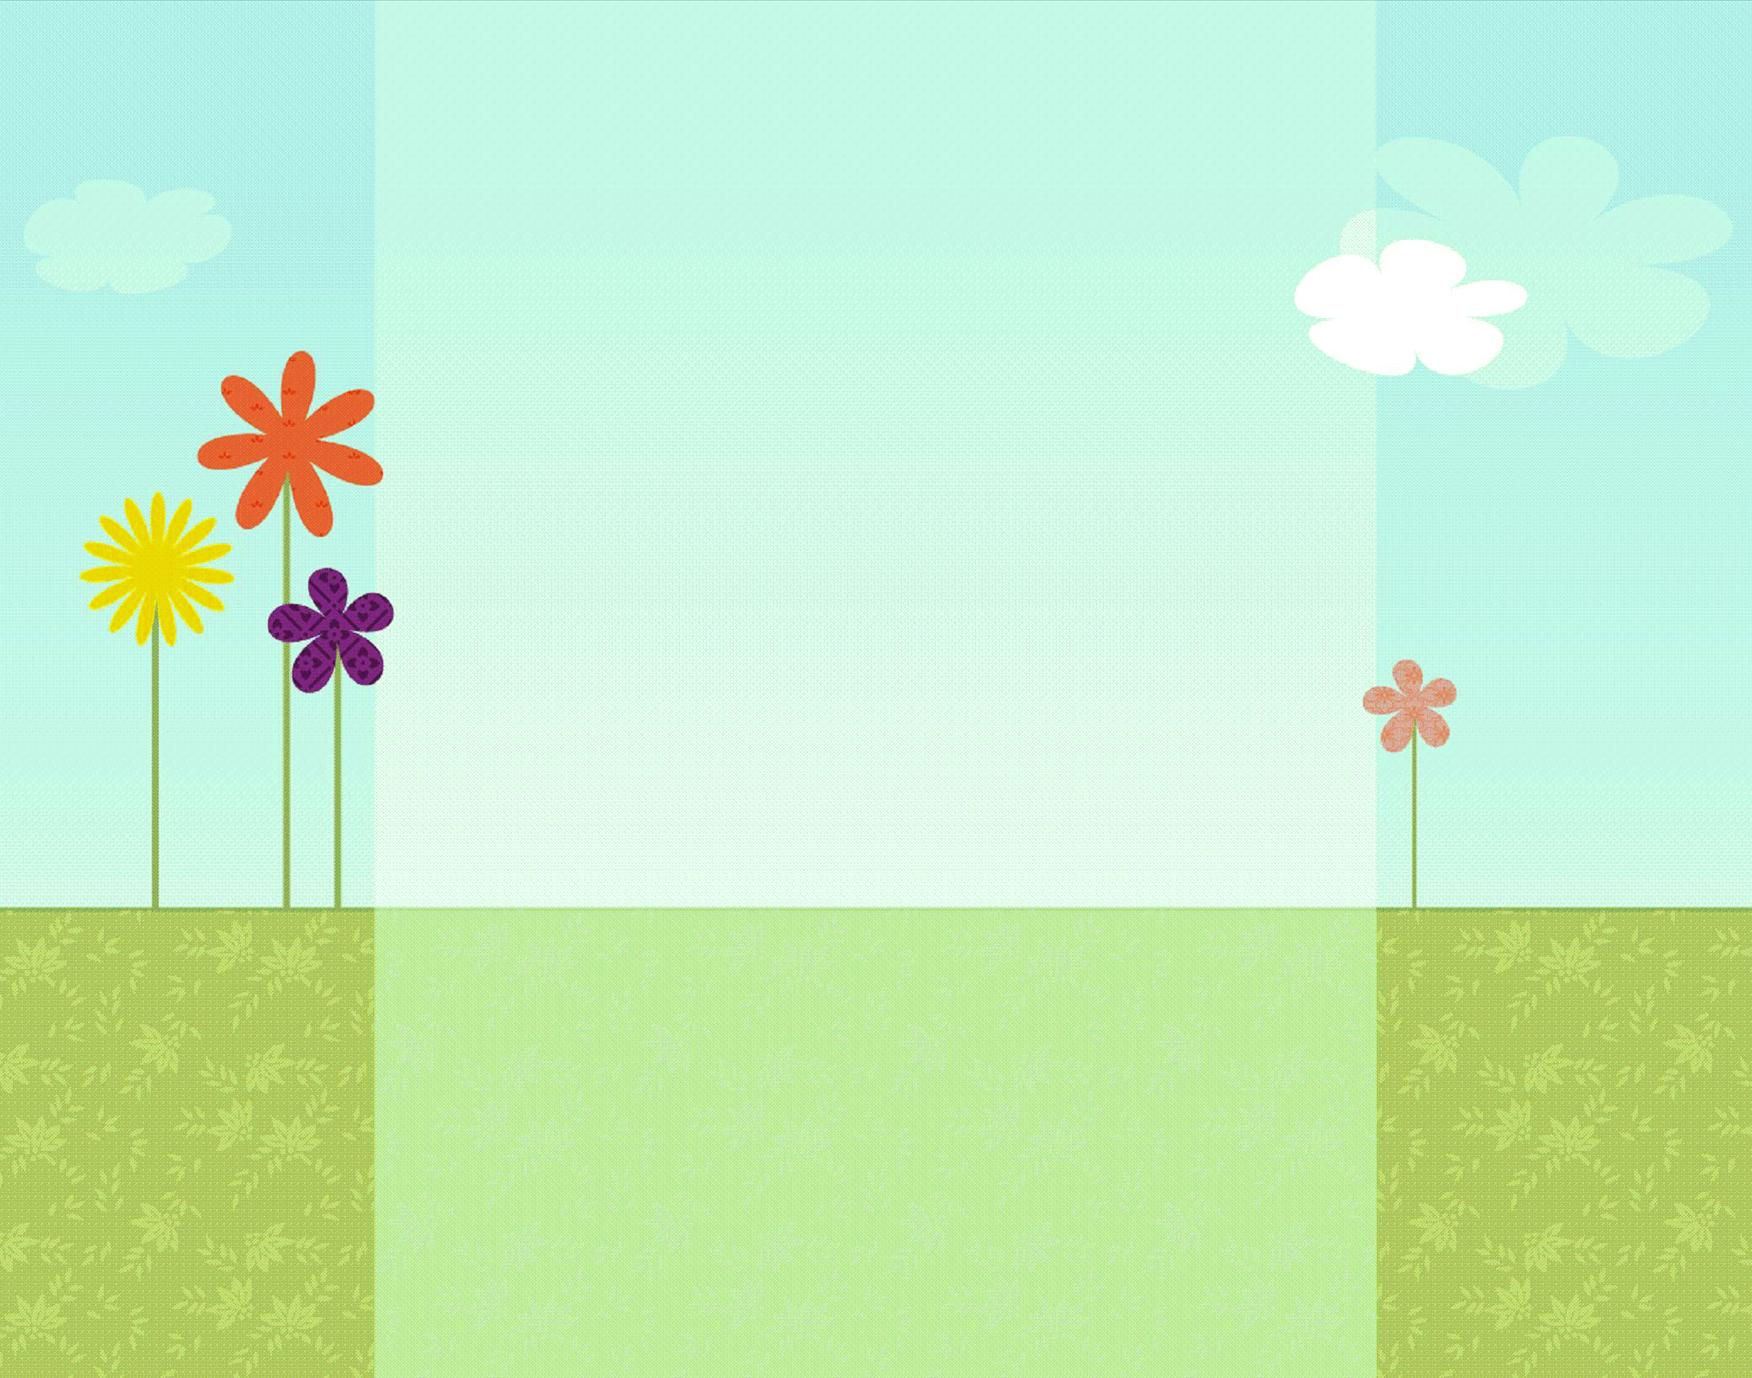 Sunshine and Flowers Background